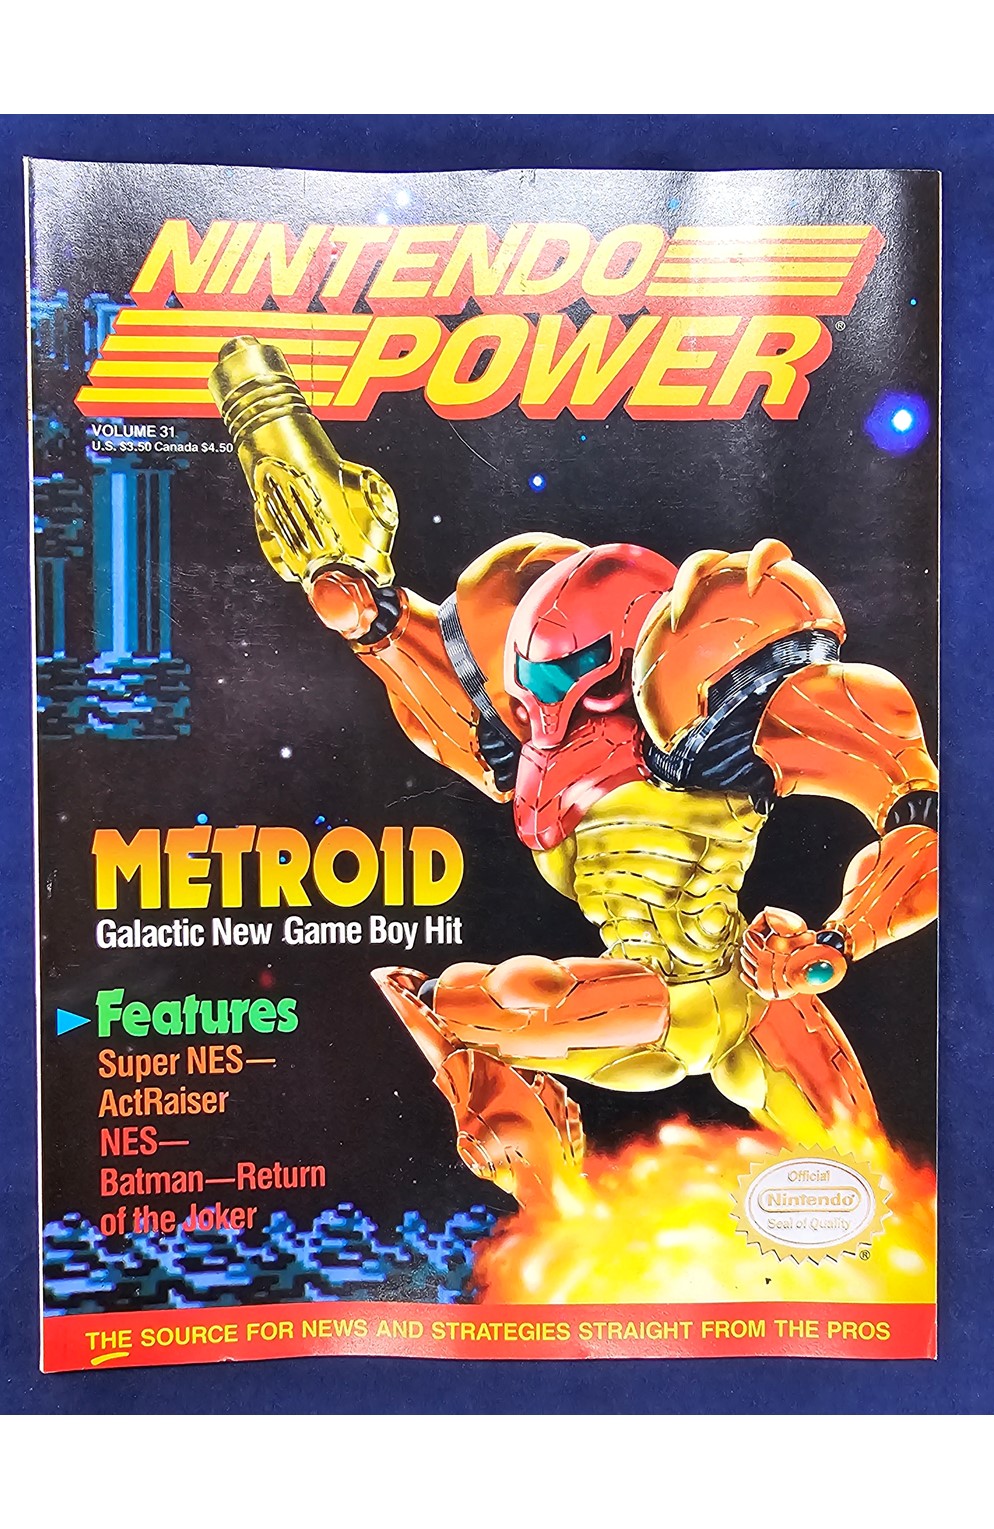 Nintendo Power Volume 31 Metroid With Poster